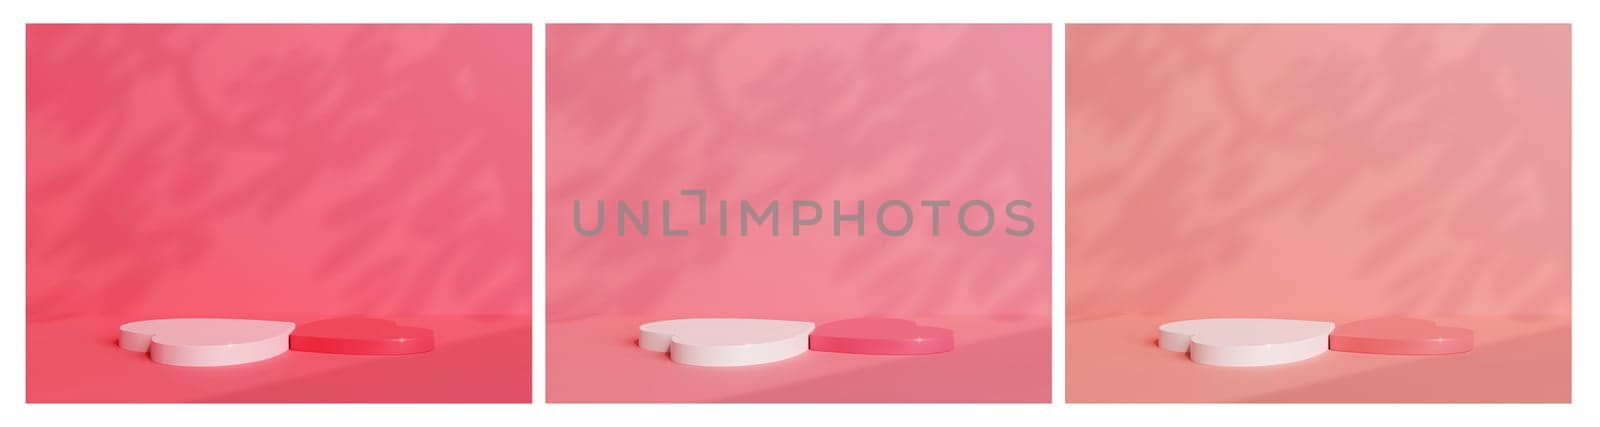 Set of pink, Pedestal podium heart shape, Valentine minimal scene mockup products showcase, Promotion display. 3D rendering illustration by meepiangraphic